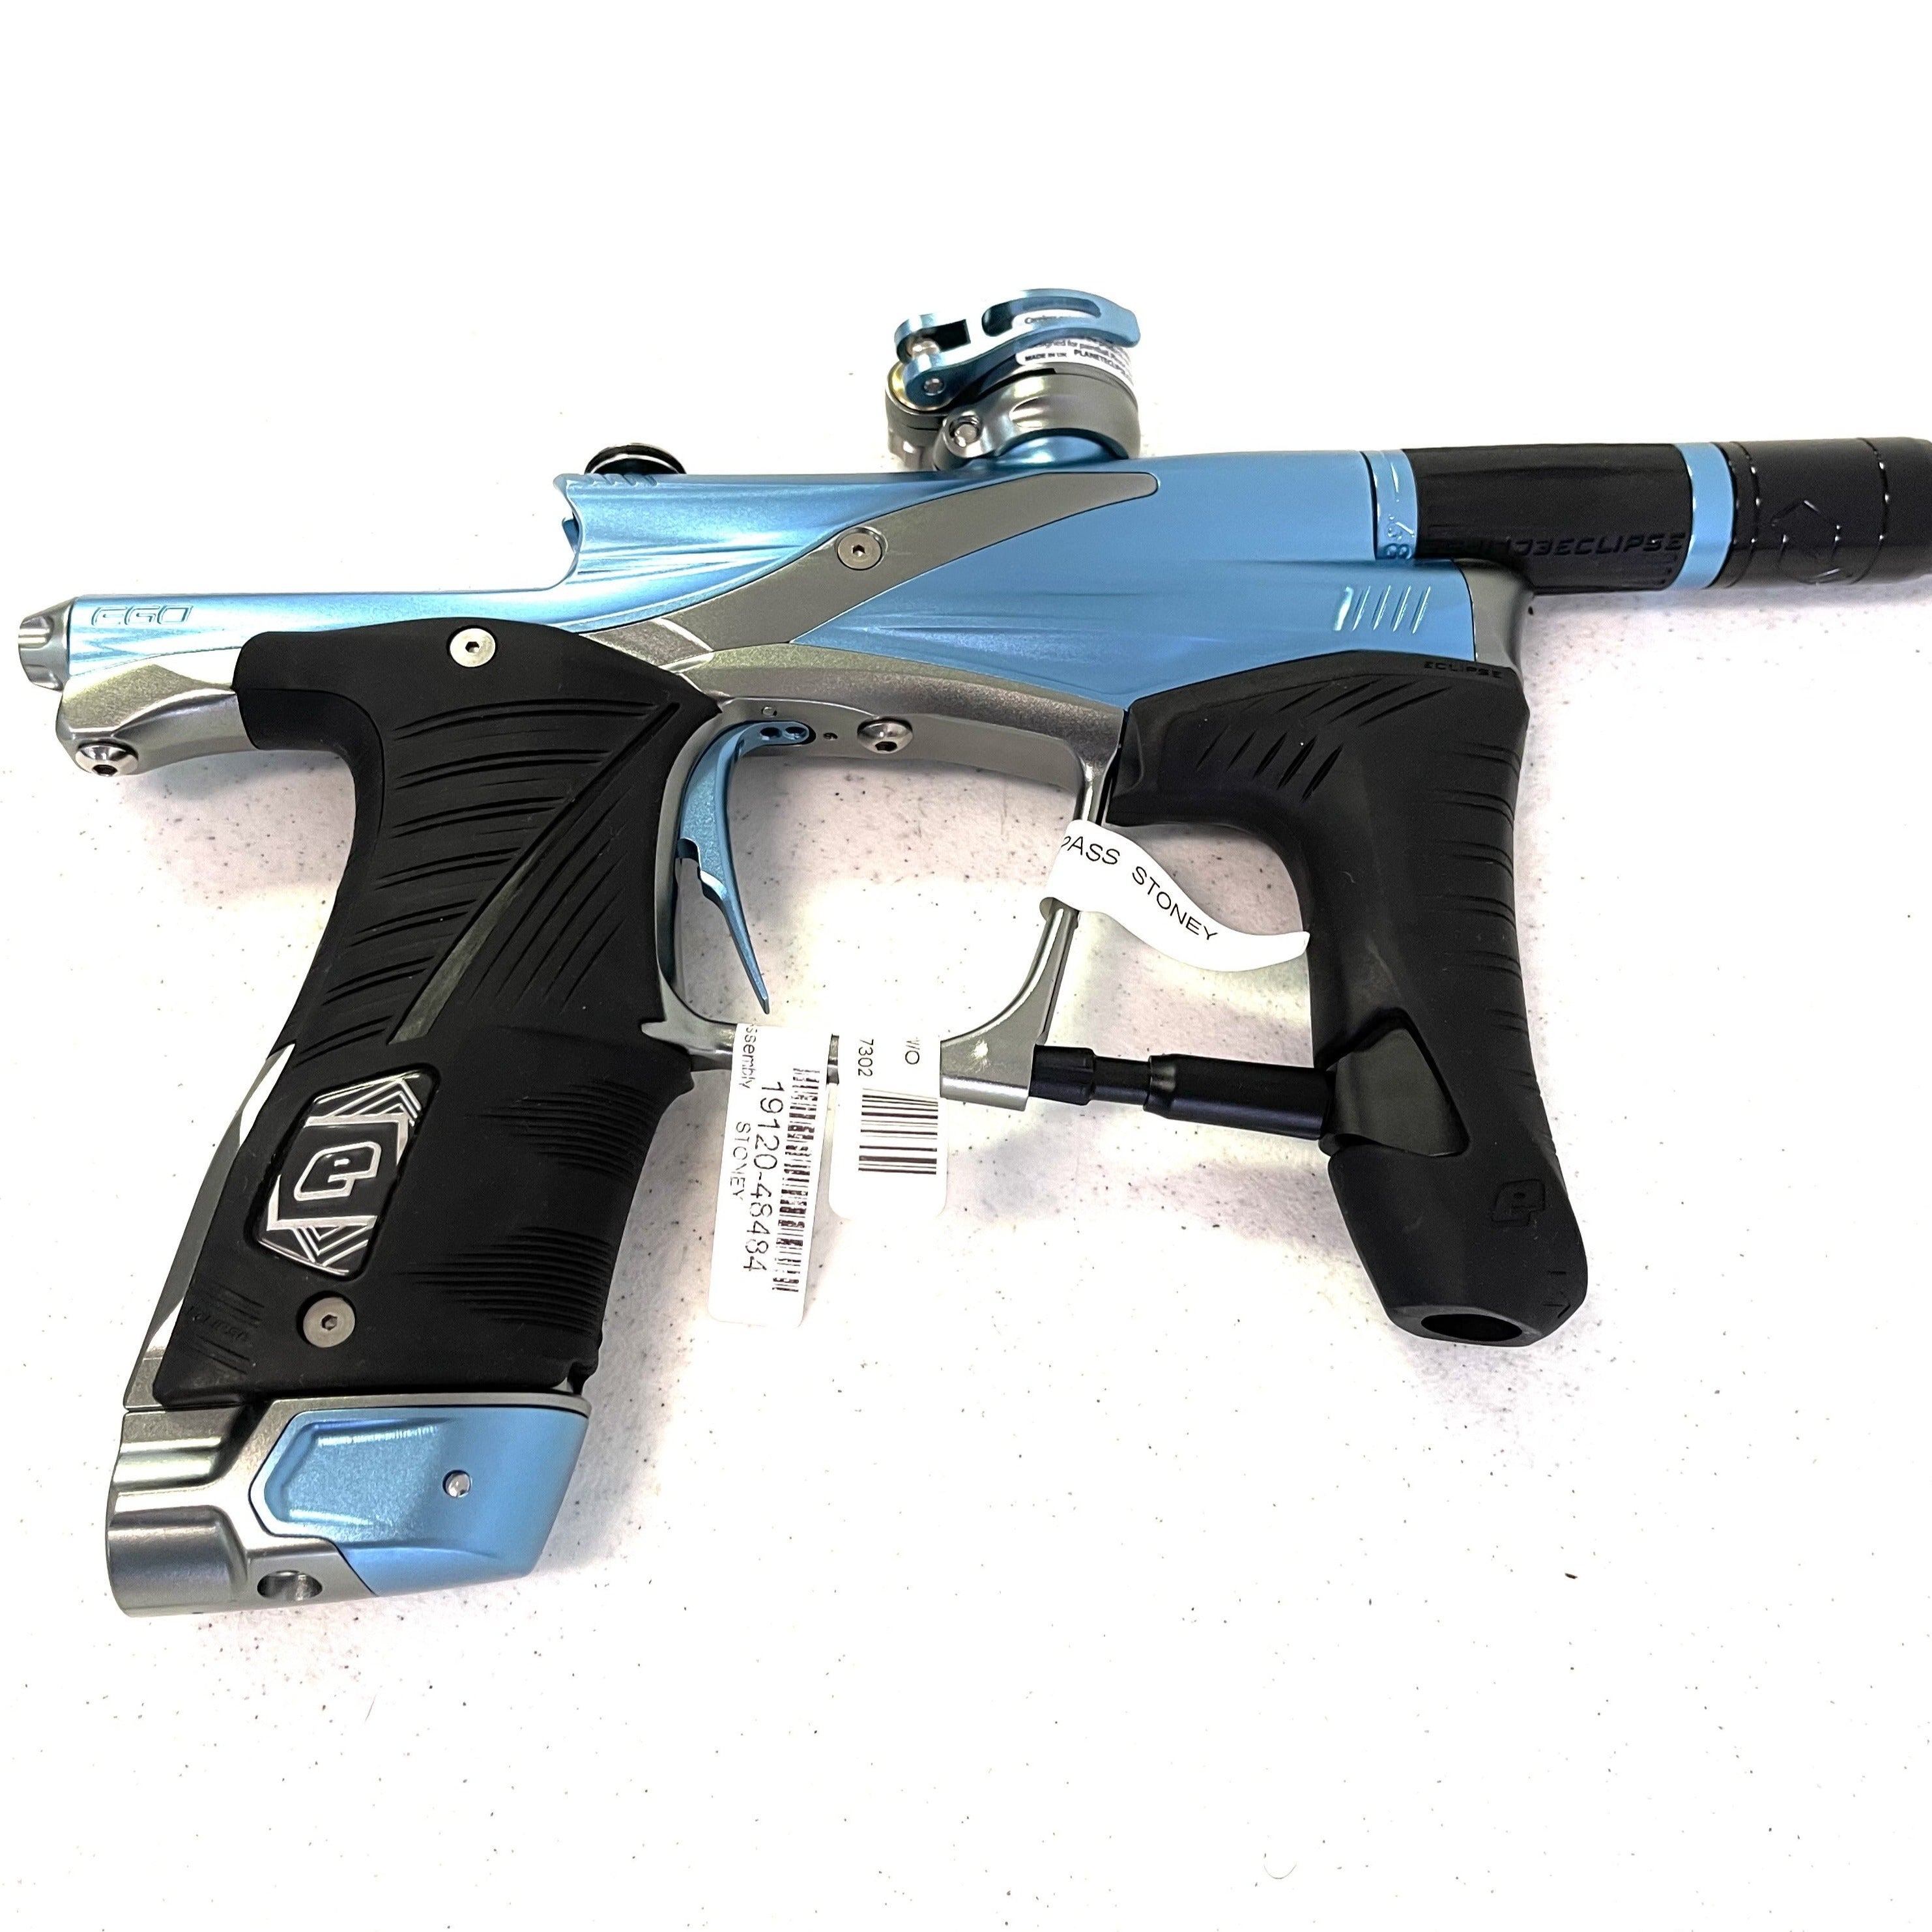 Planet Eclipse LV 1.6 Paintball Gun – Tagged Speedball Gun